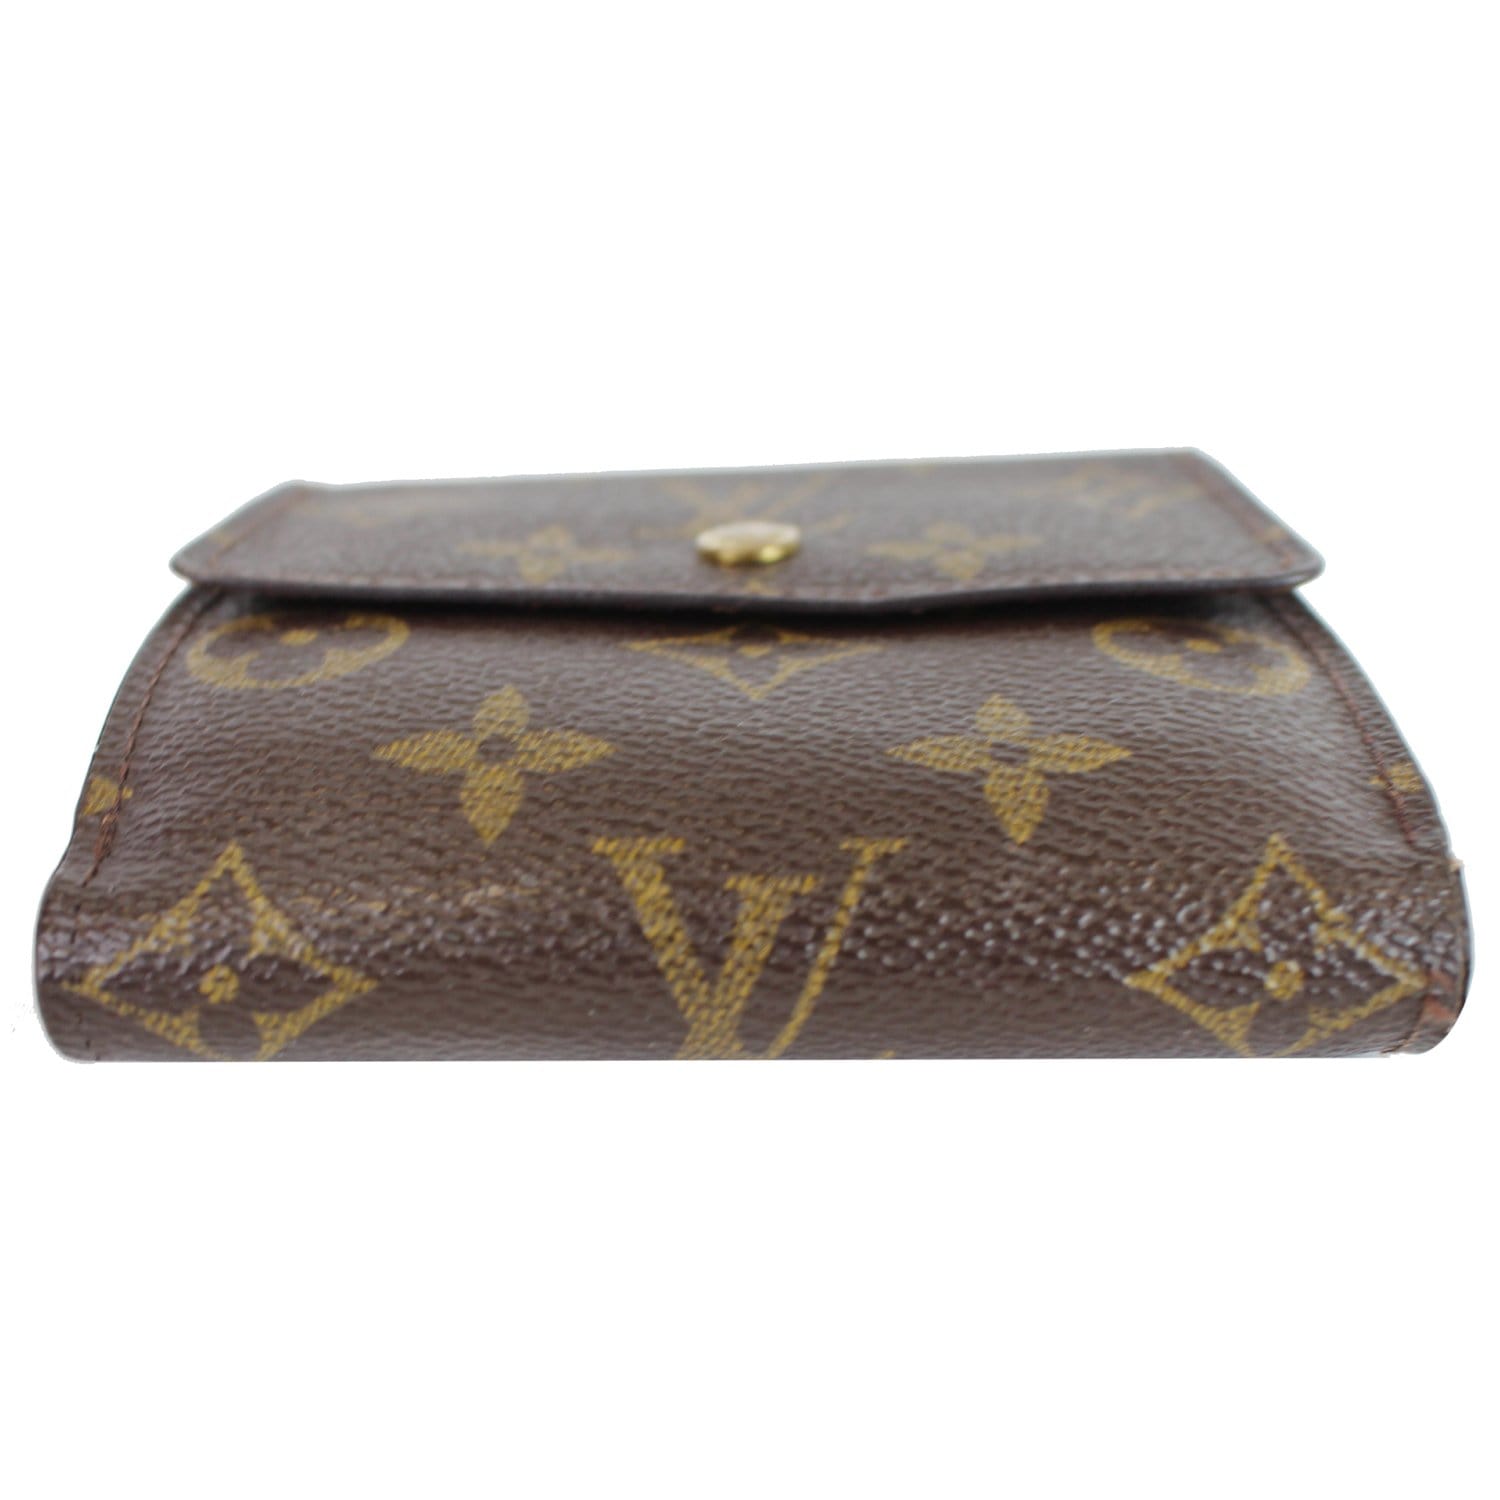 Louis Vuitton Monogram Billfold Wallet